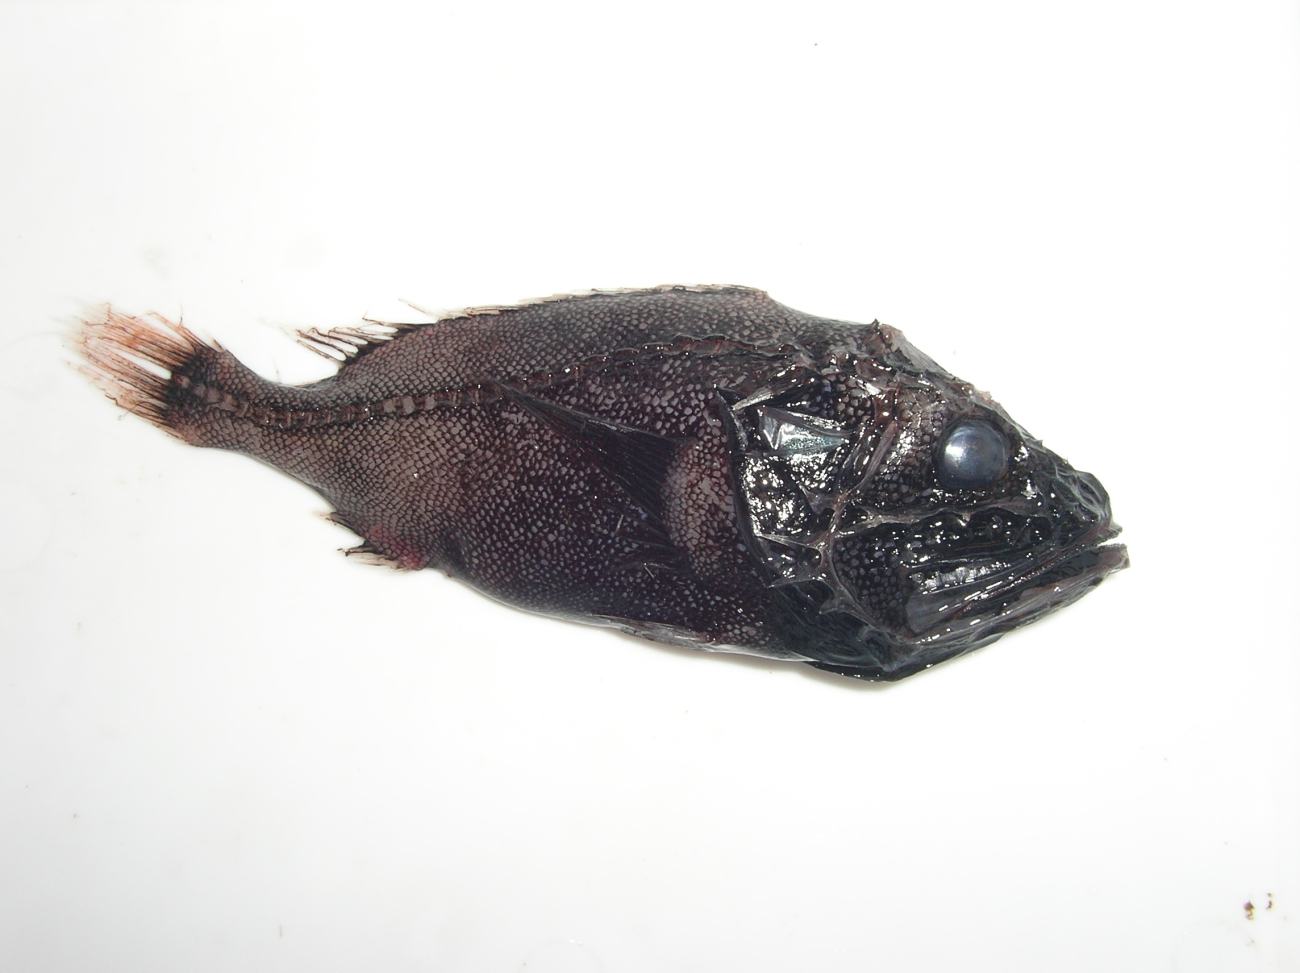 Unidentified deep sea fish